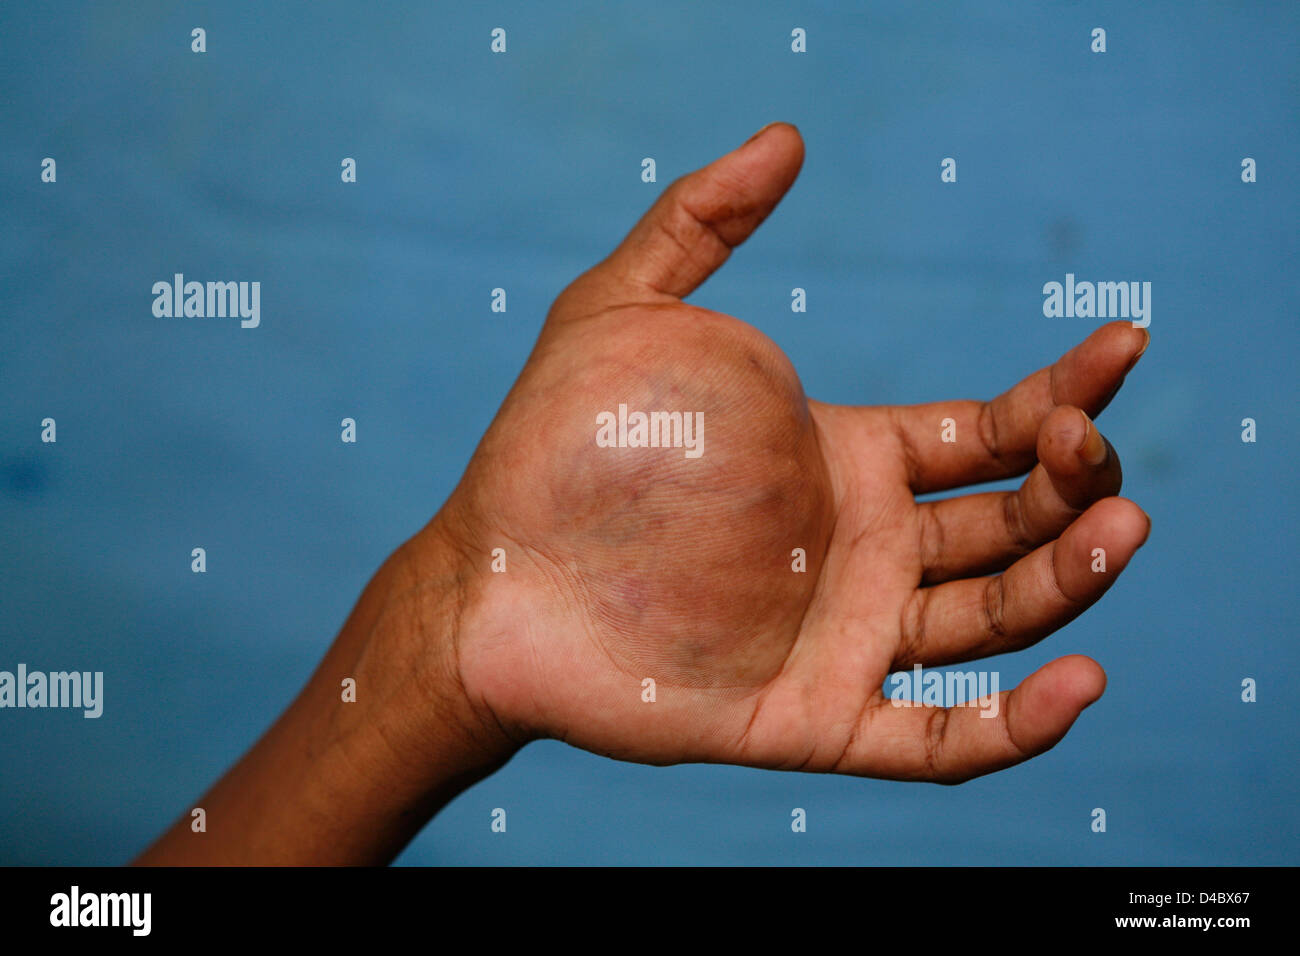 Large neurofibroma growing on woman's hand Stock Photo